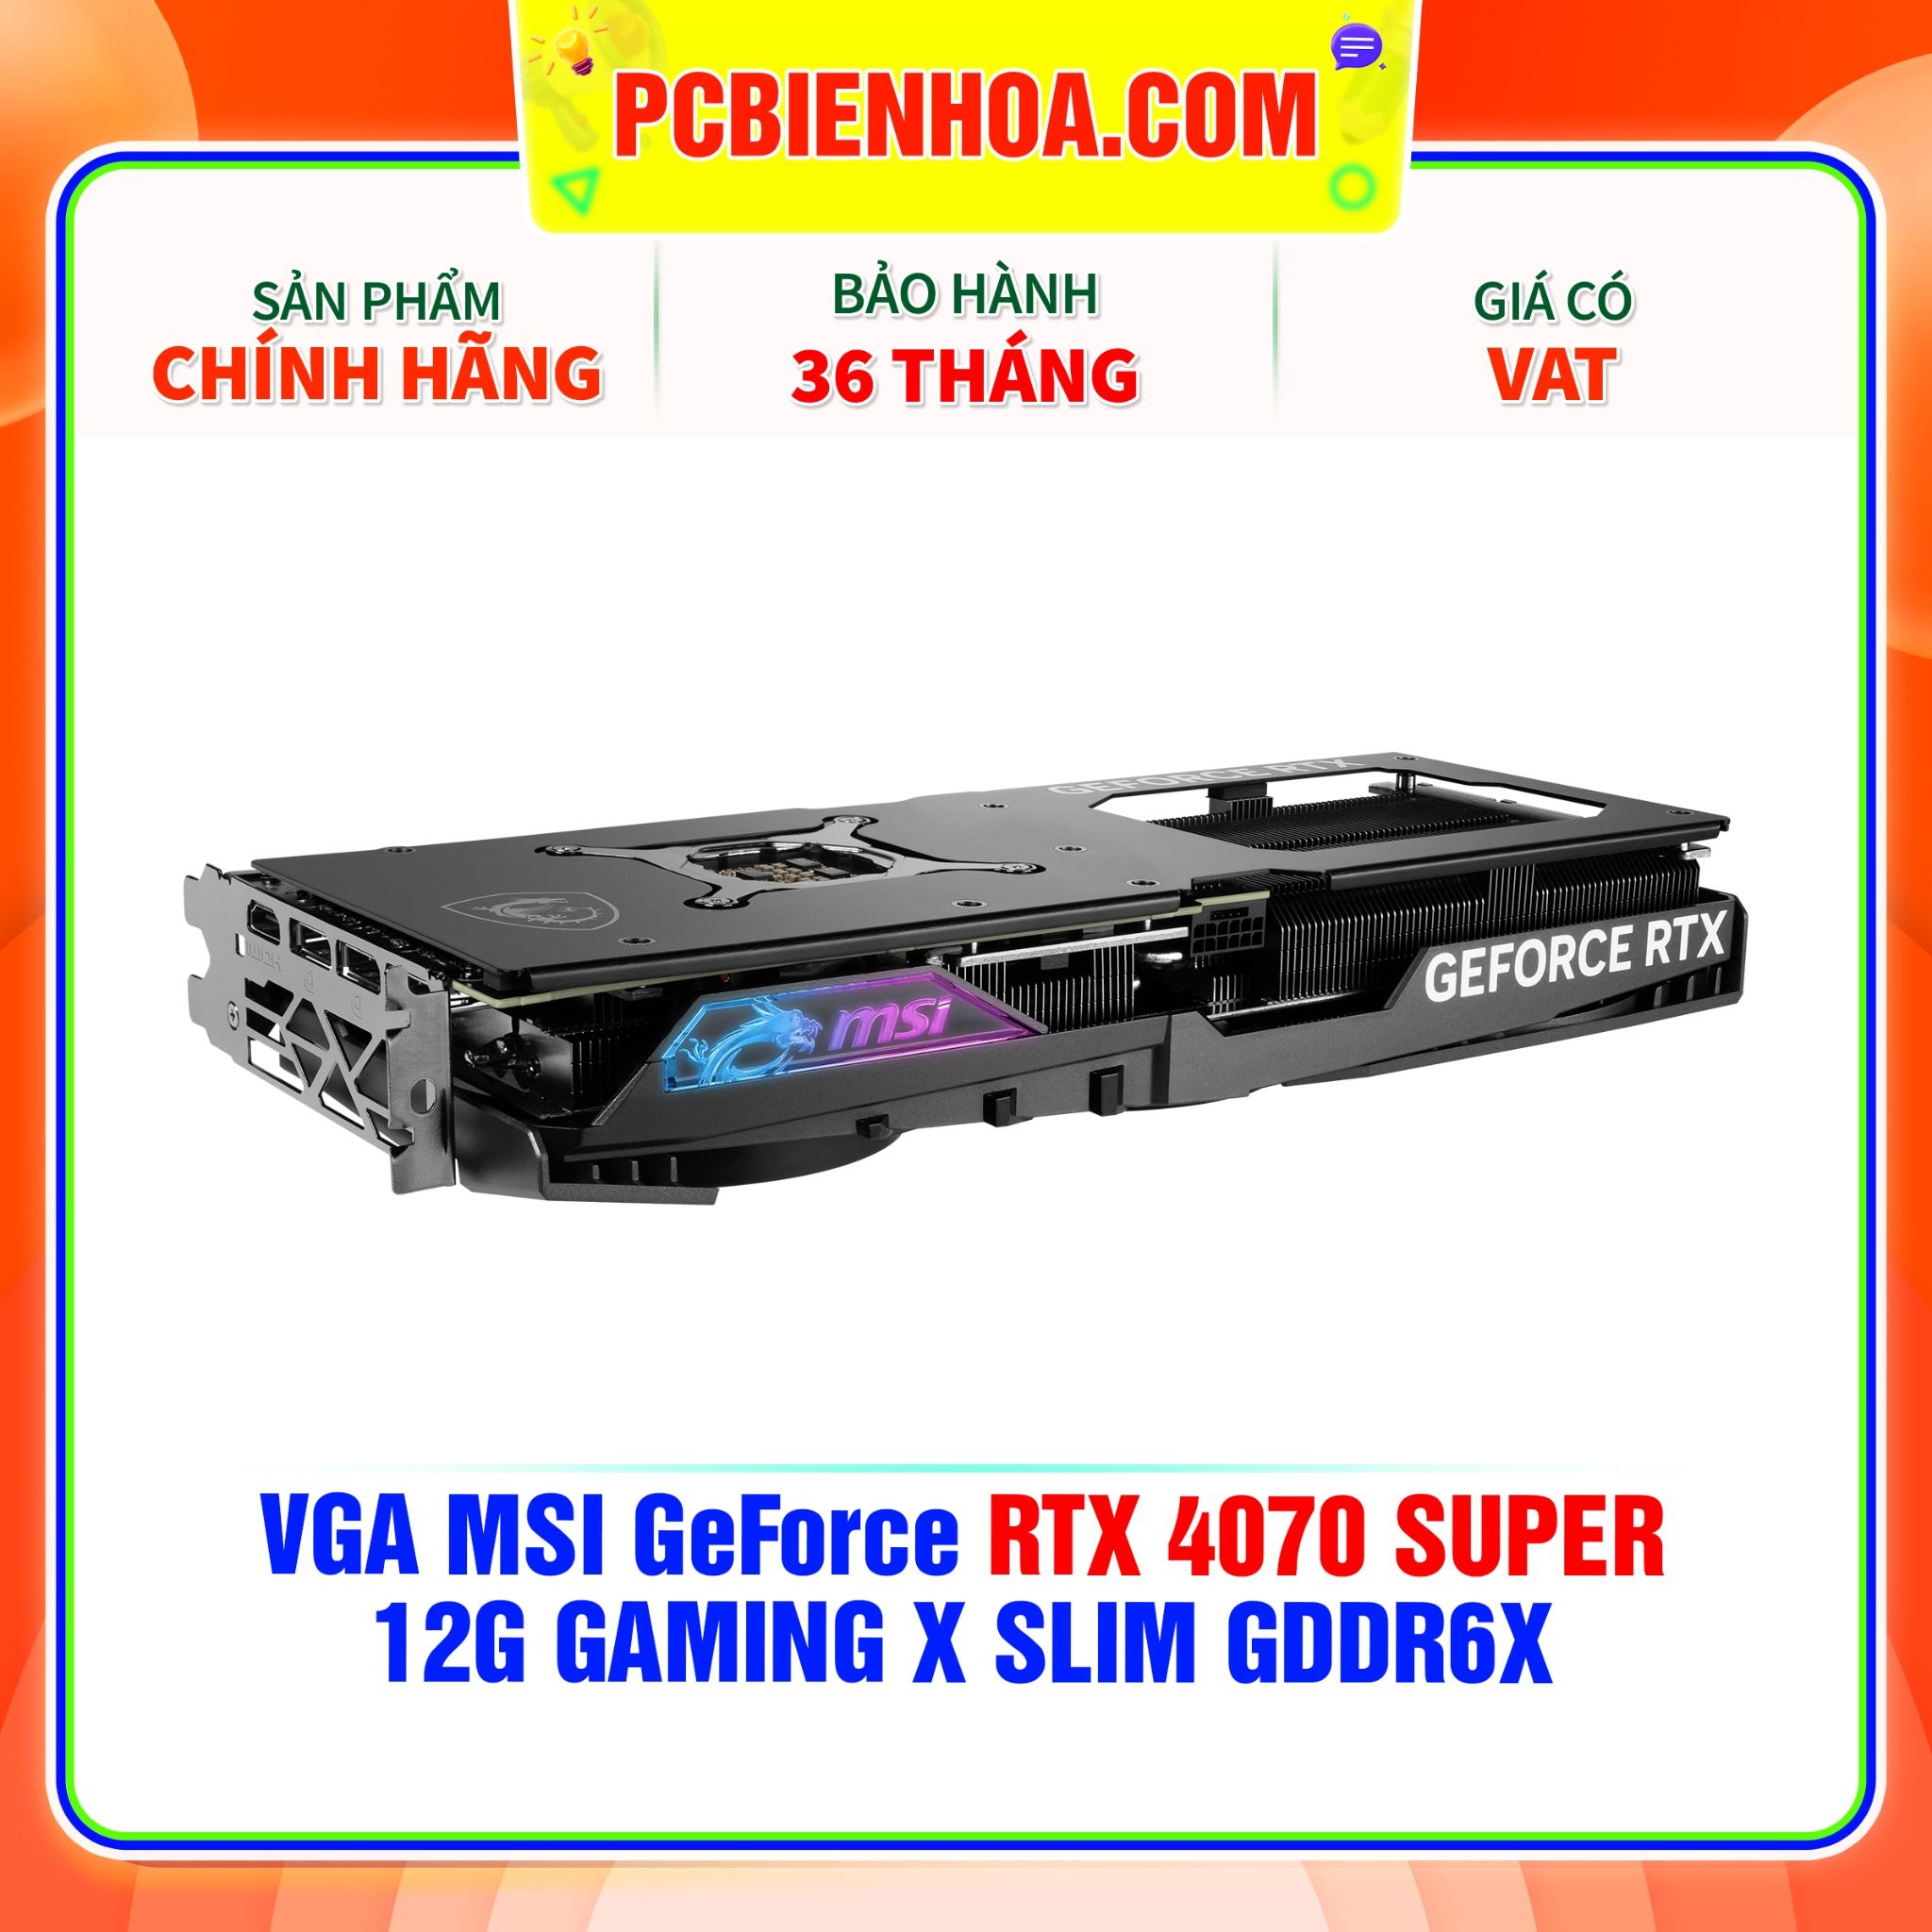  VGA MSI GeForce RTX 4070 SUPER 12G GAMING X SLIM GDDR6X 